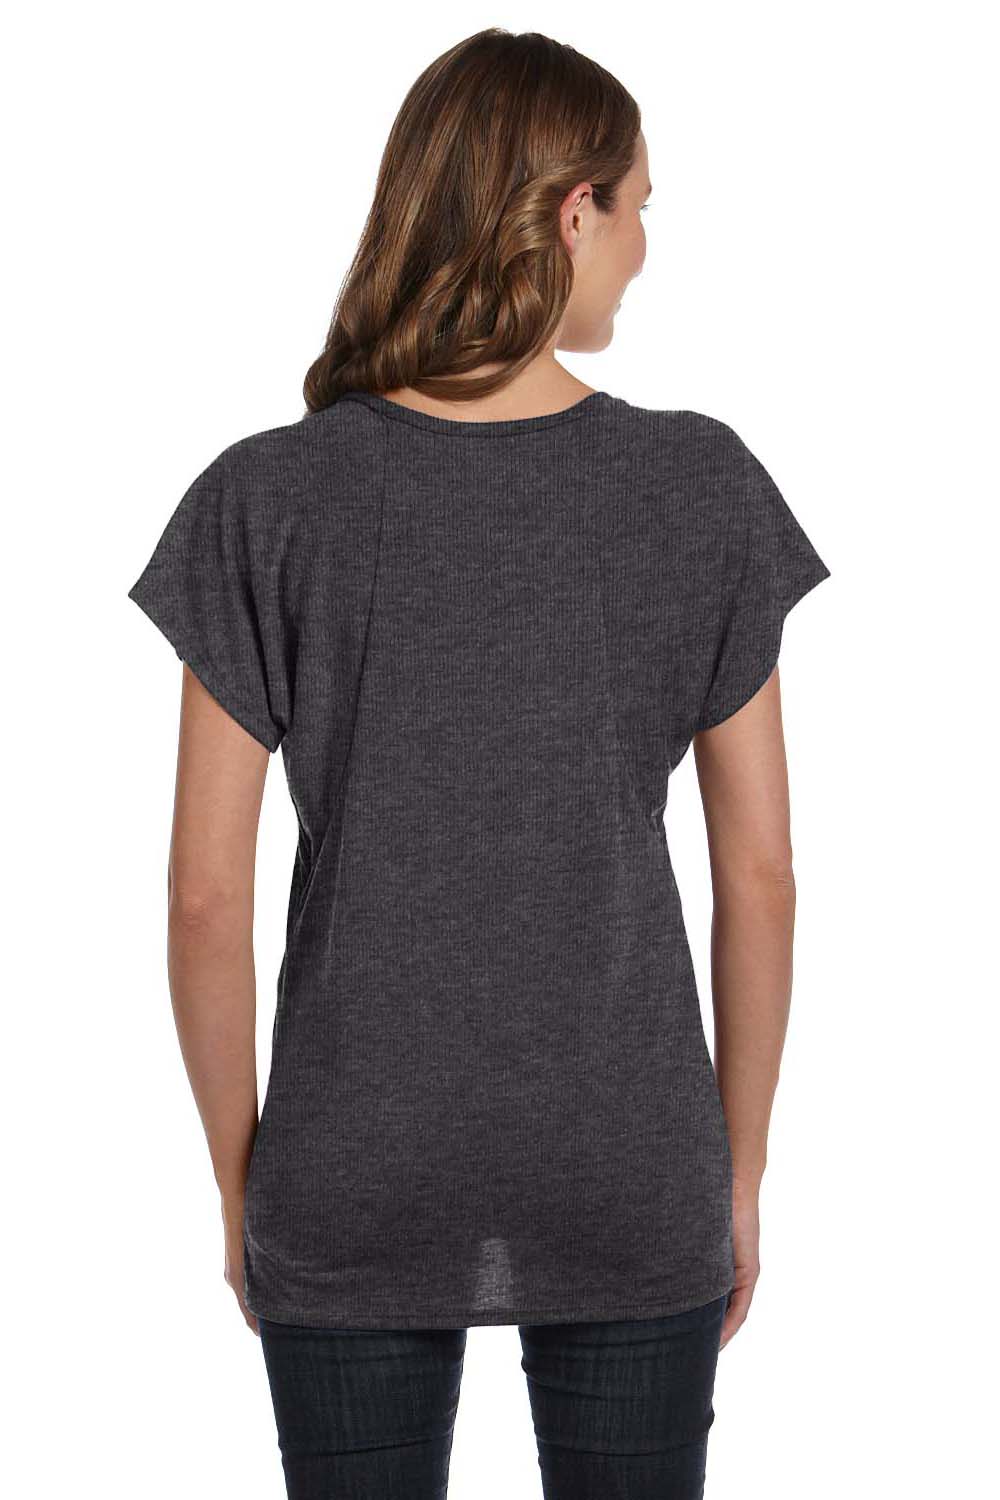 Bella + Canvas B8801/8801 Womens Flowy Short Sleeve Scoop Neck T-Shirt Heather Dark Grey Model Back